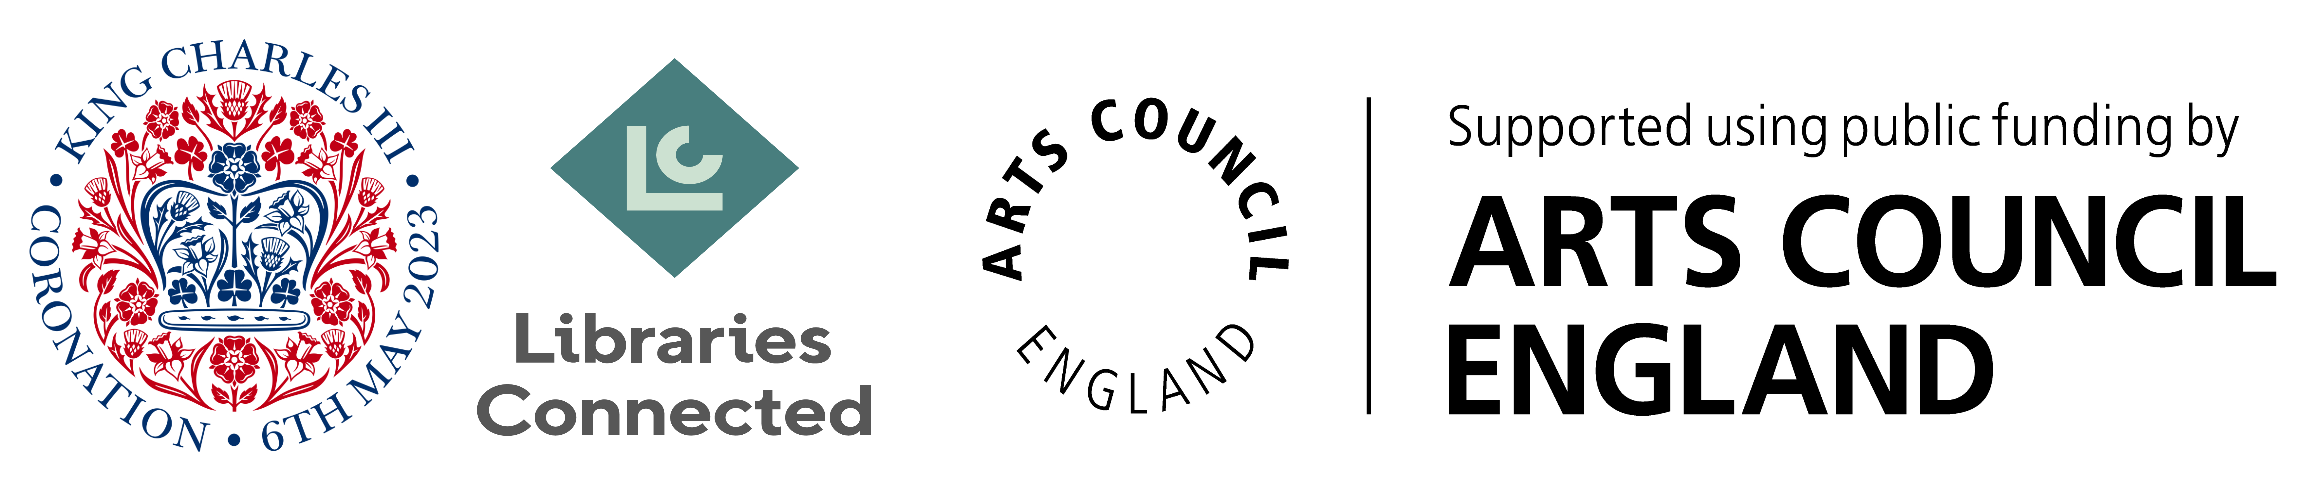 Coronation emblem, Libraries Connected logo and Arts Council England logo